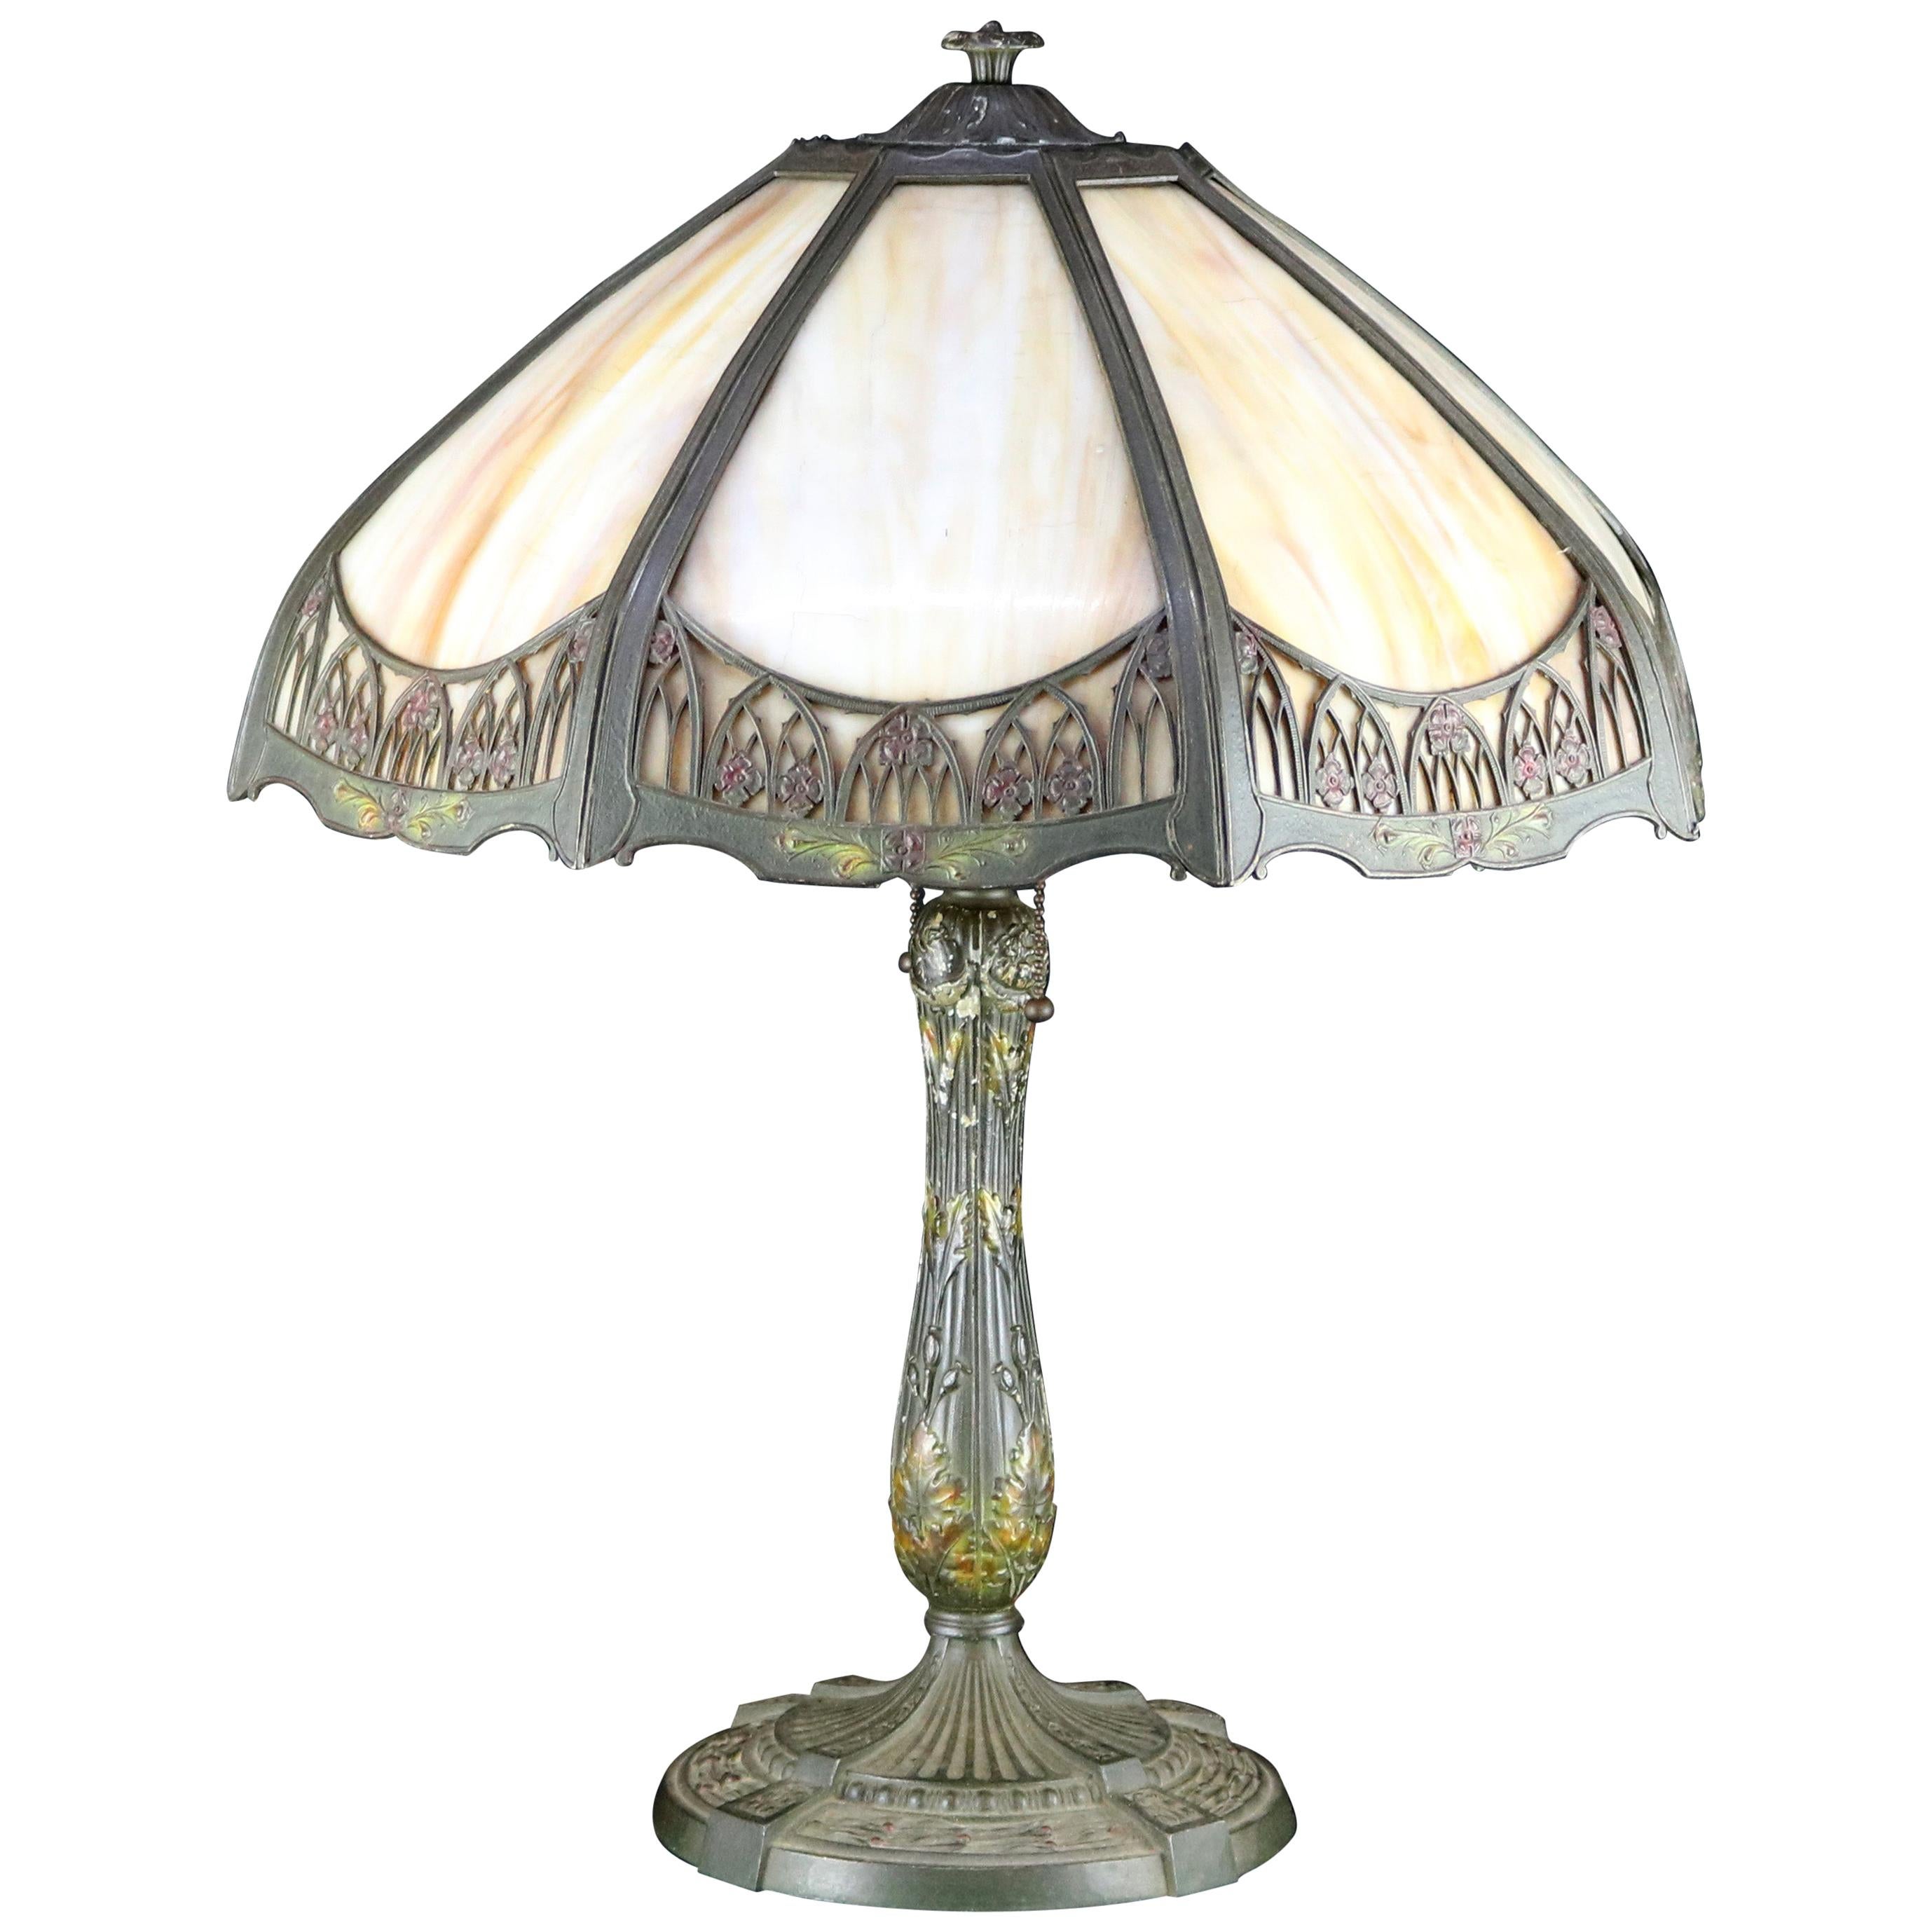 Antique Arts & Crafts Bradley & Hubbard School Slag Glass Table Lamp, circa 1910